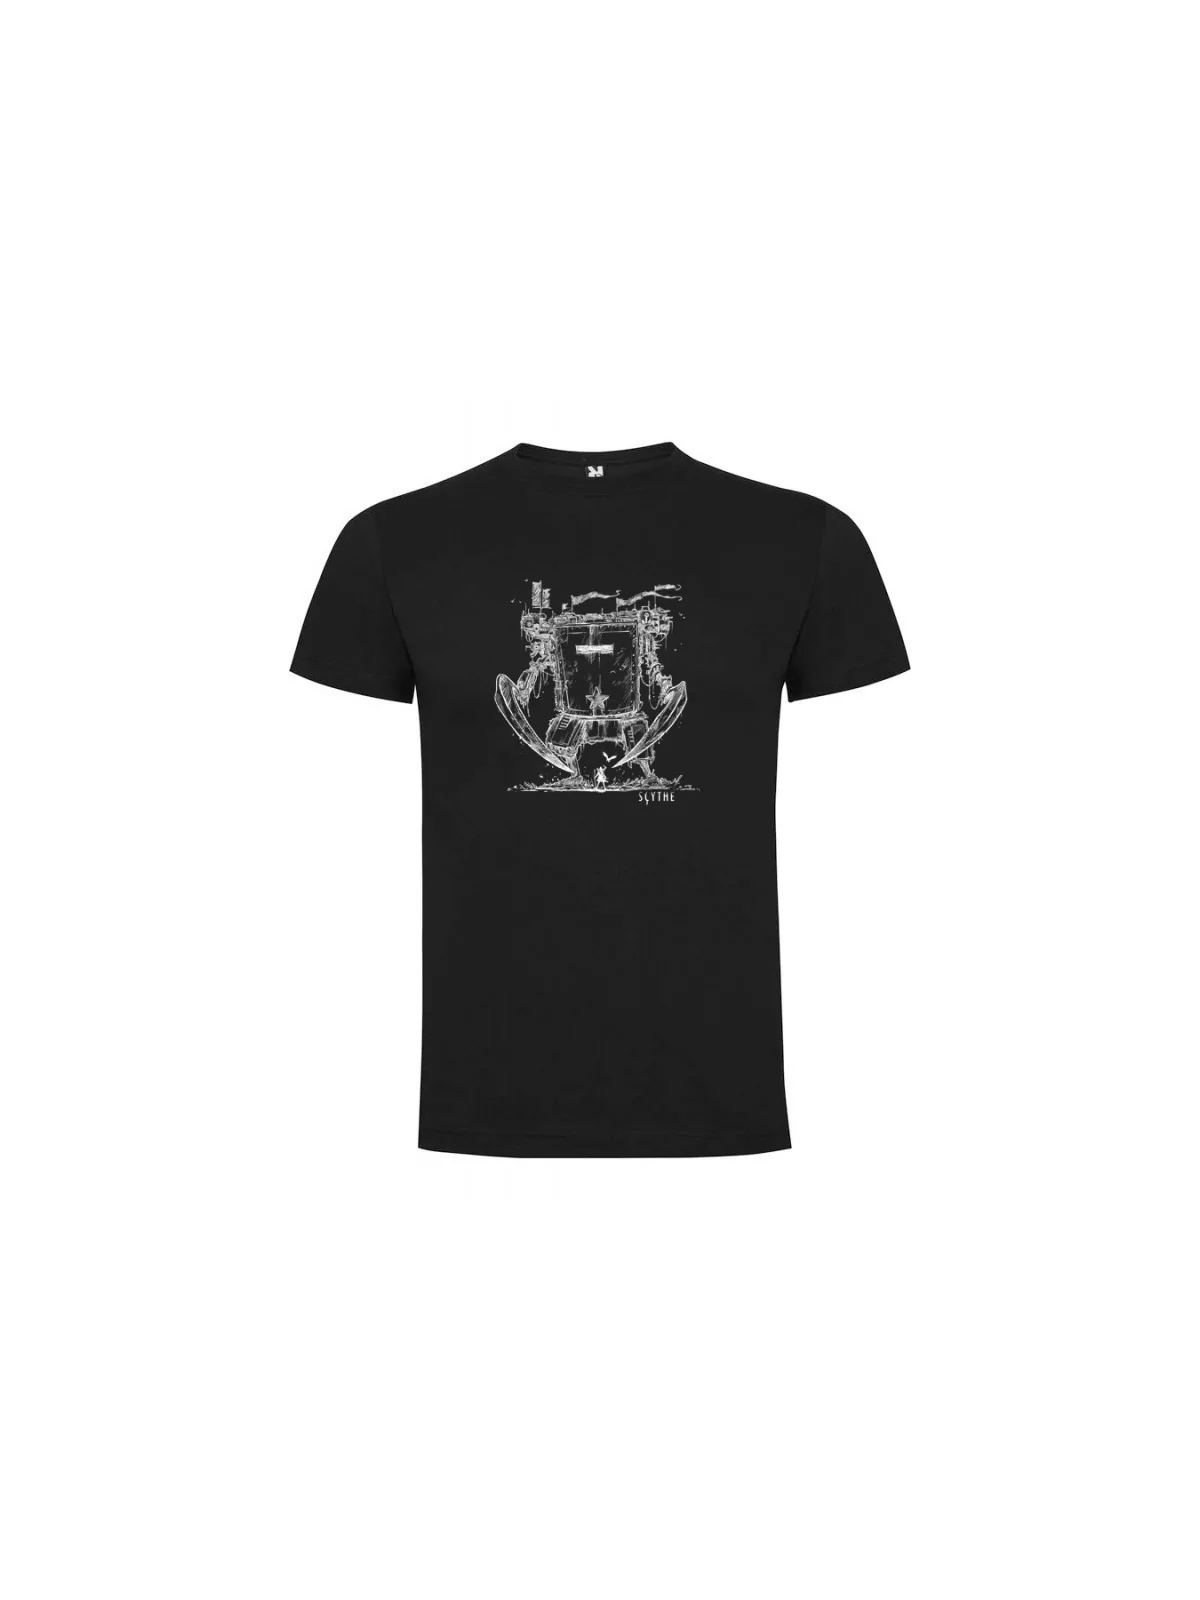 Comprar Camiseta Unisex Mech Scythe barato al mejor precio 10,00 € de 